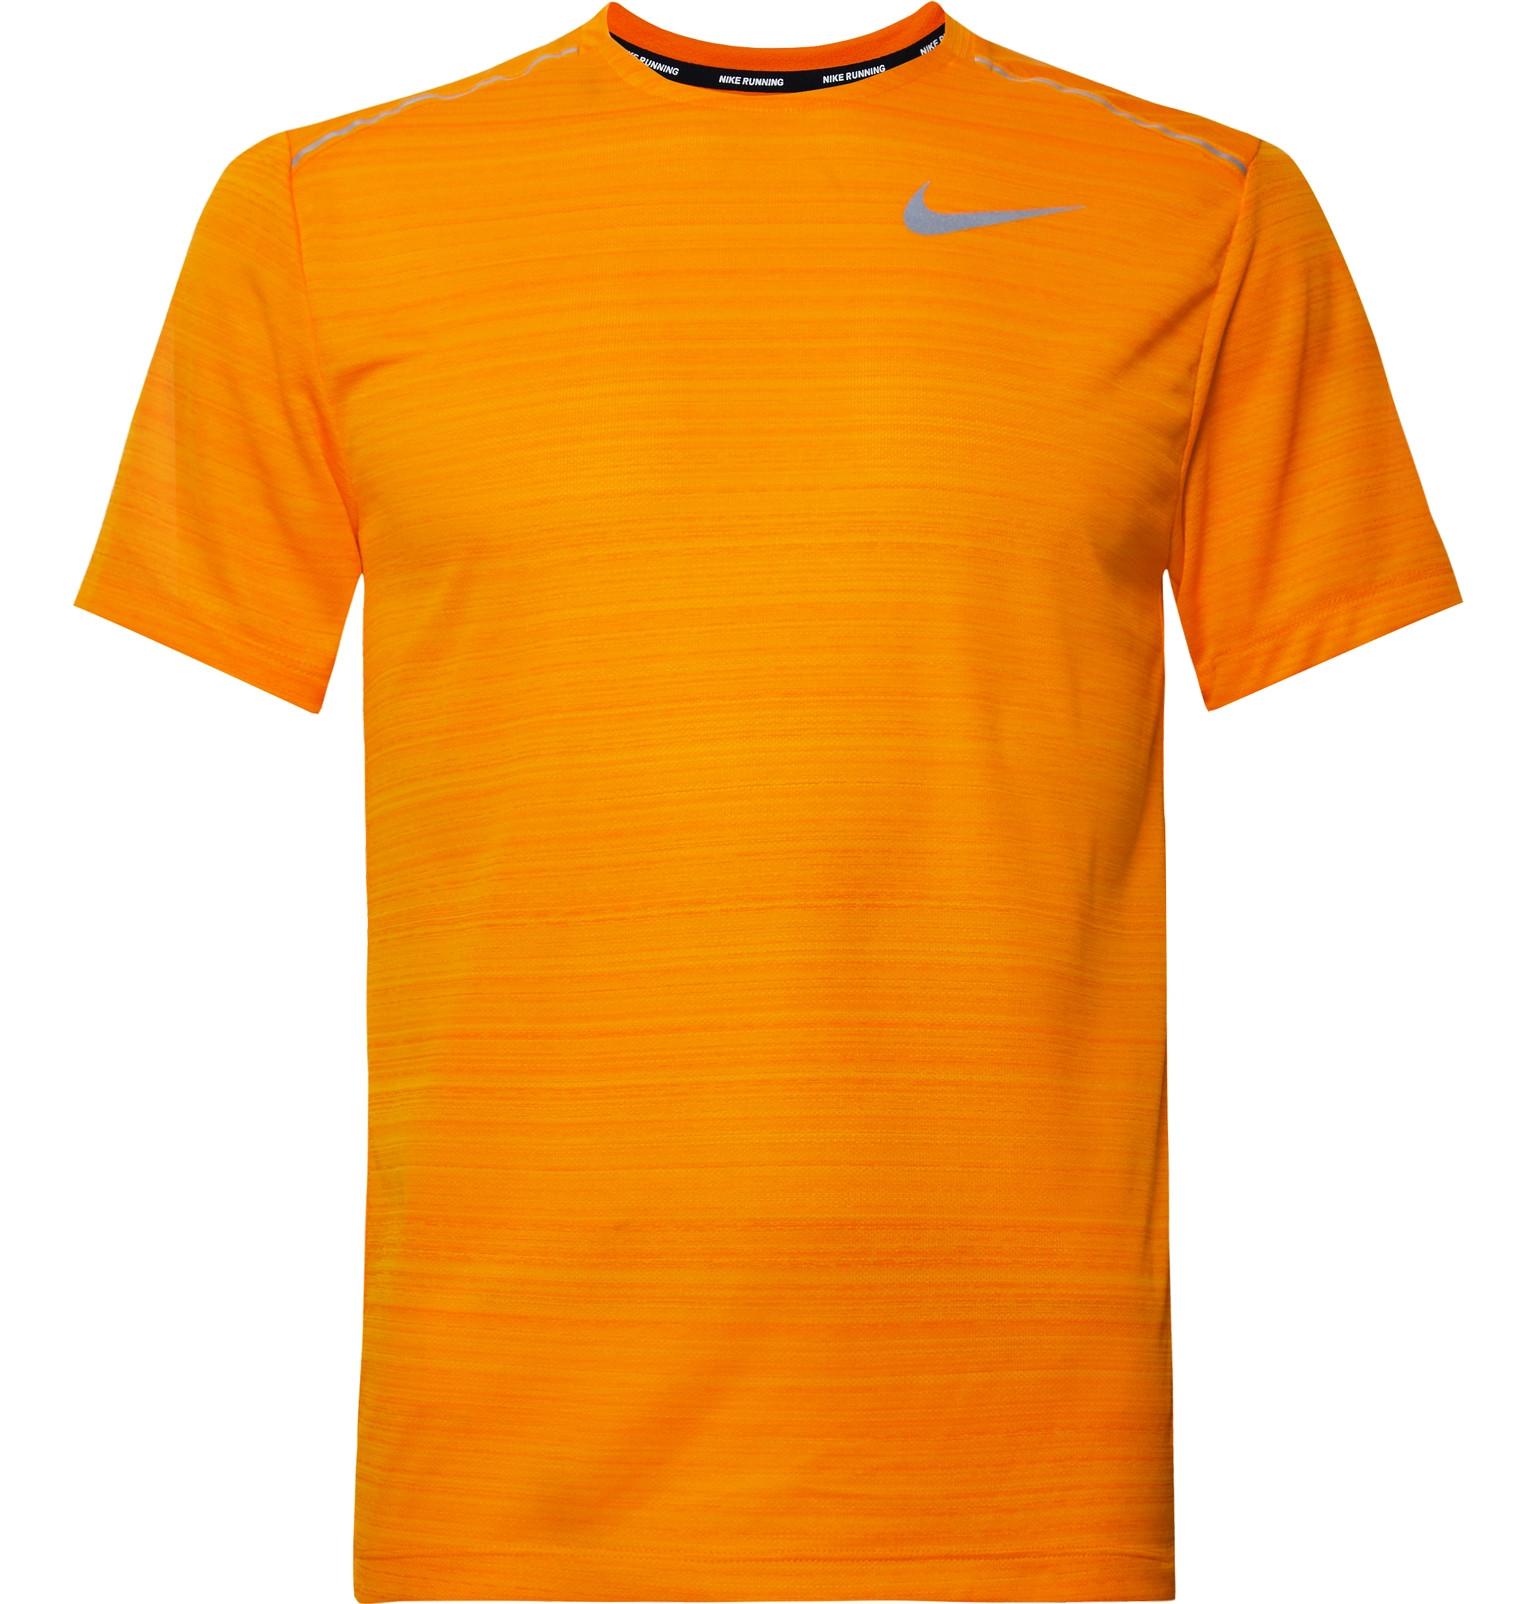 Nike Miler Breathe Dri-fit Mesh T-shirt in Orange for Men - Lyst